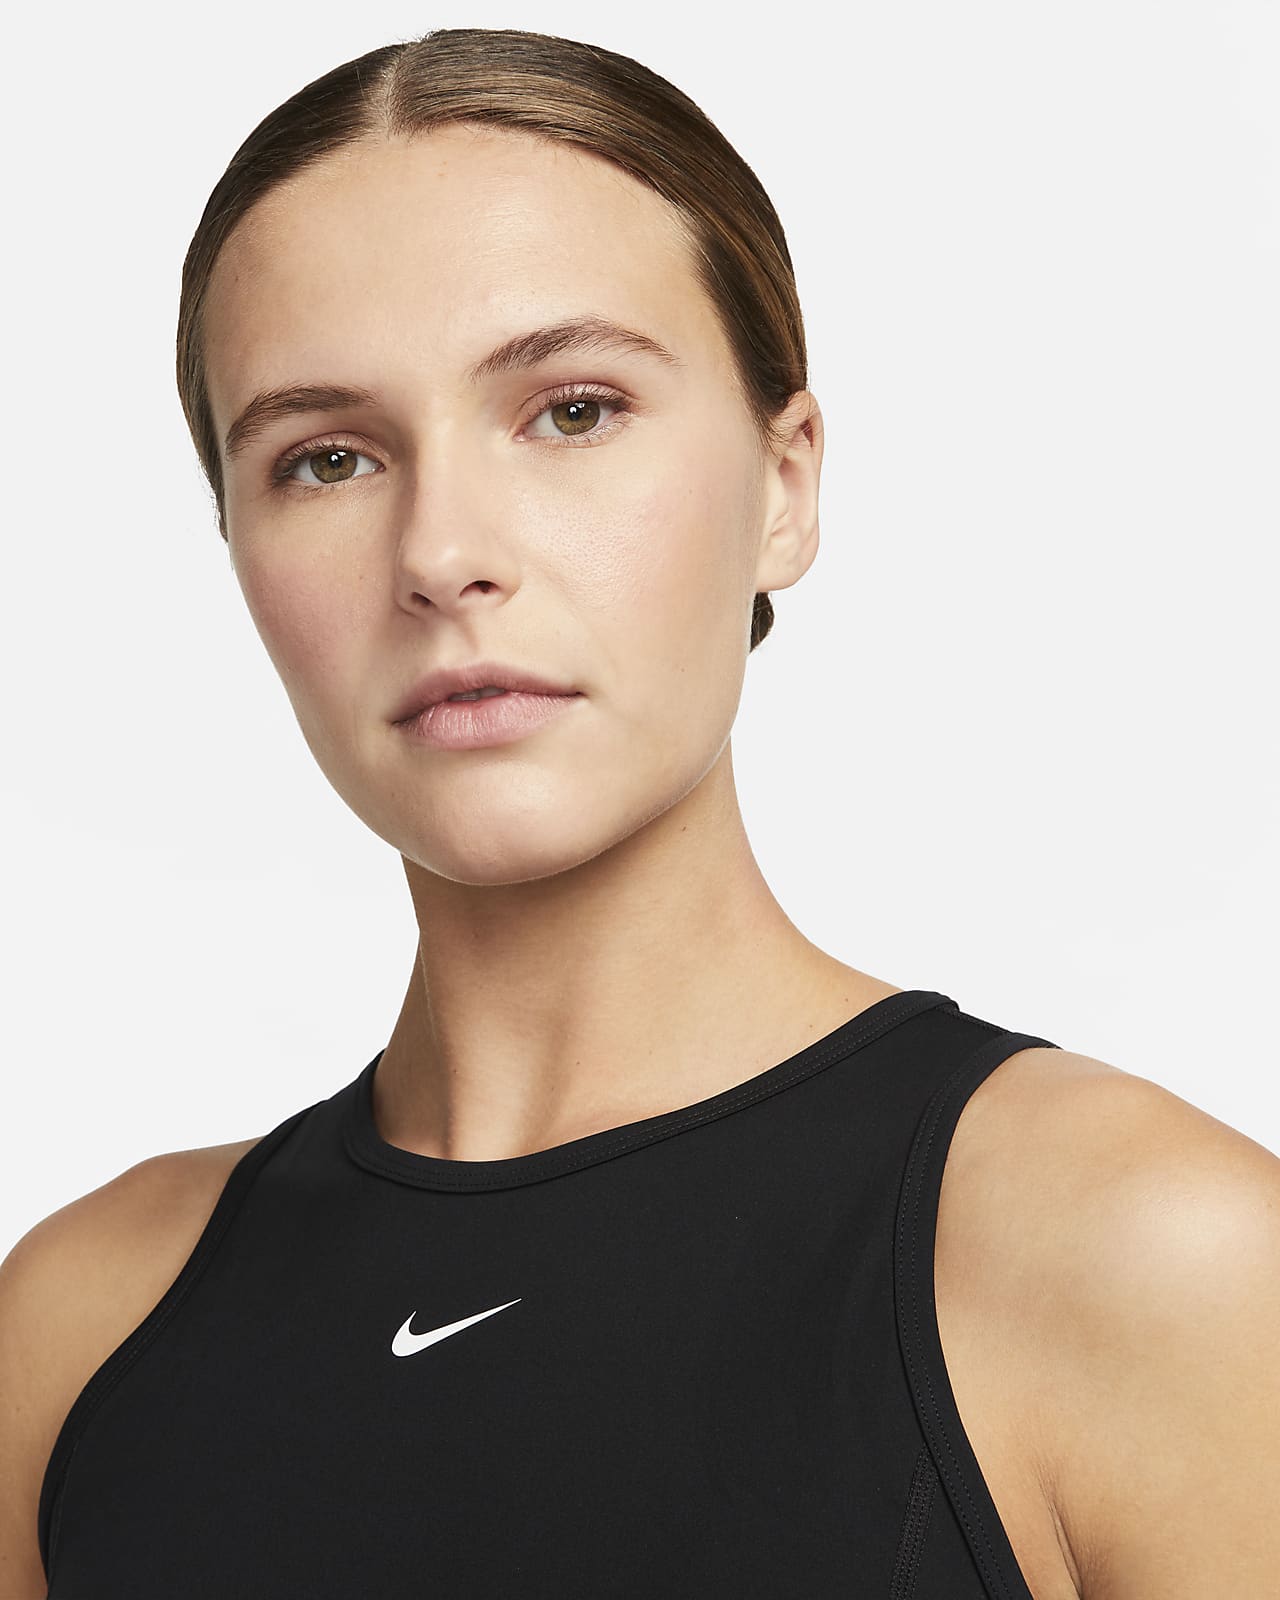 Nike Womens Pro All Over Mesh Tank Top - Black